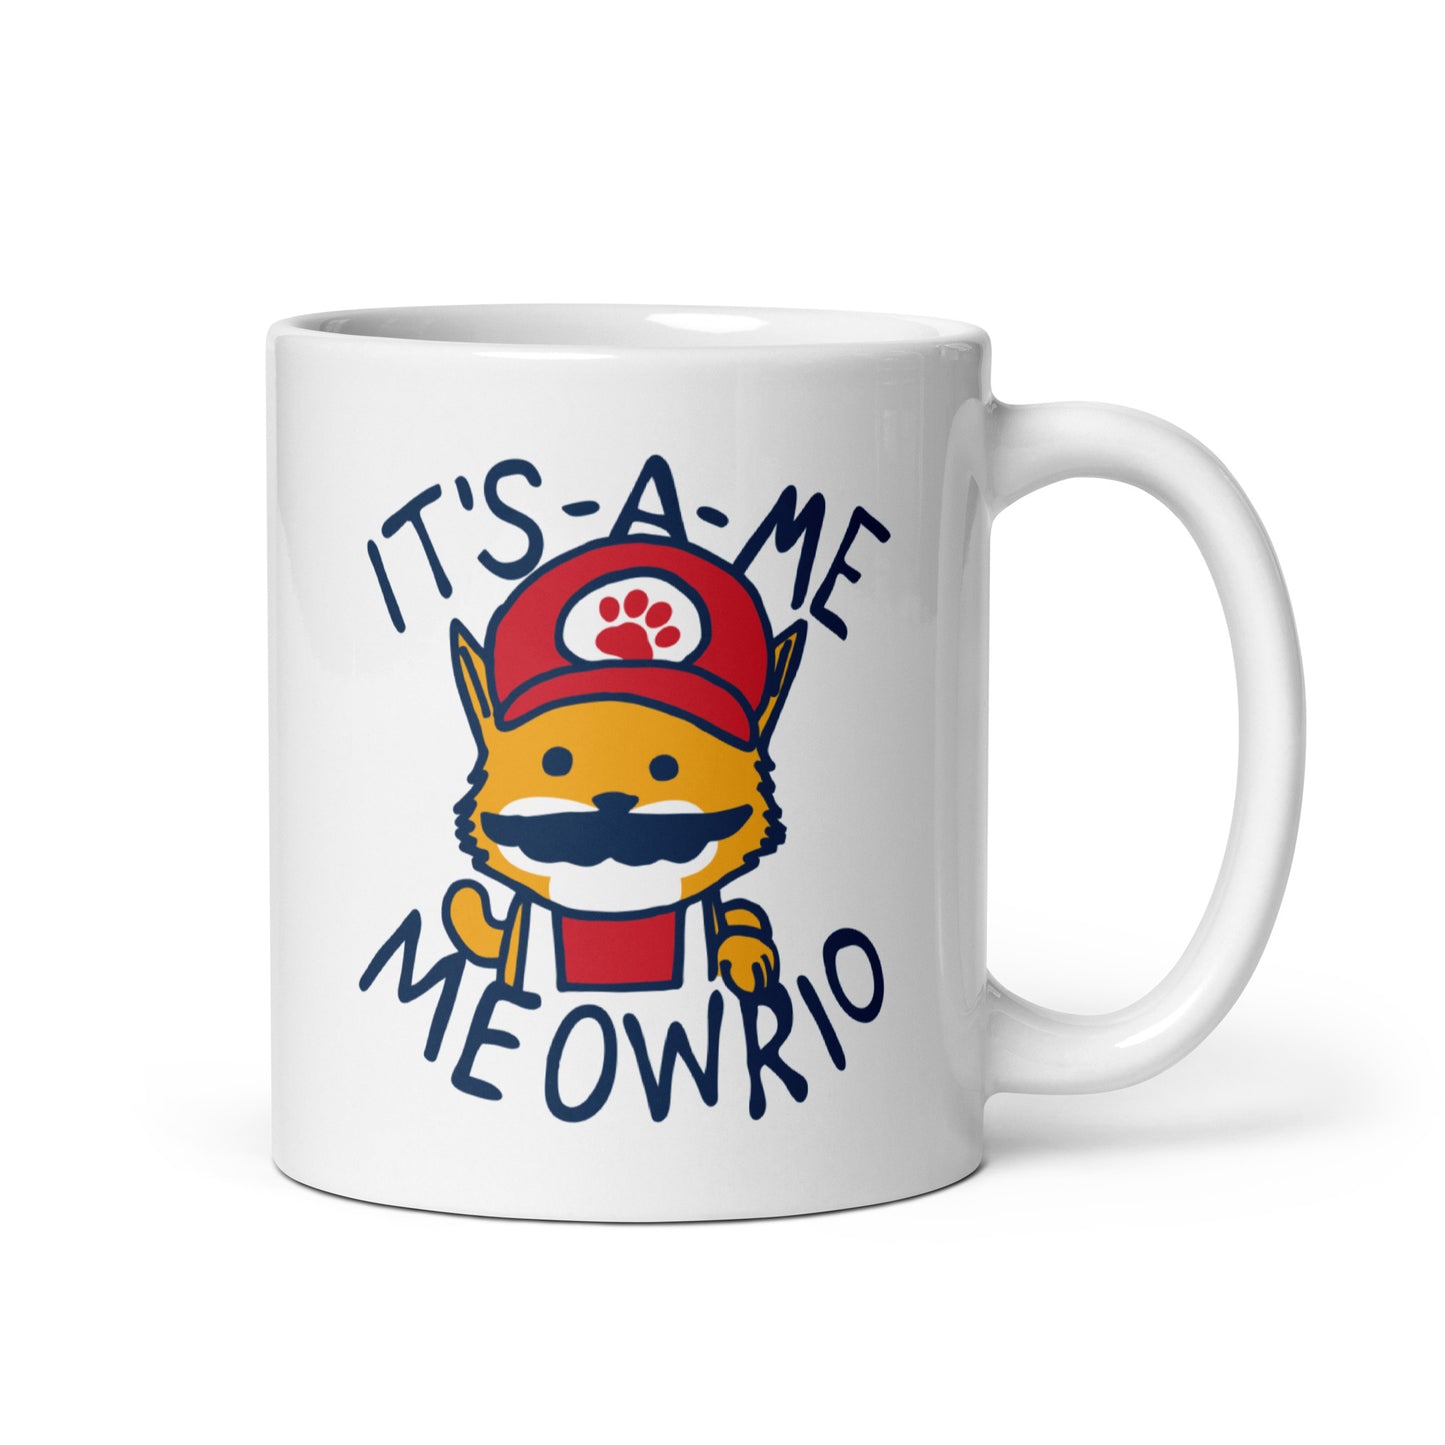 It's-a-me Meowrio Mug